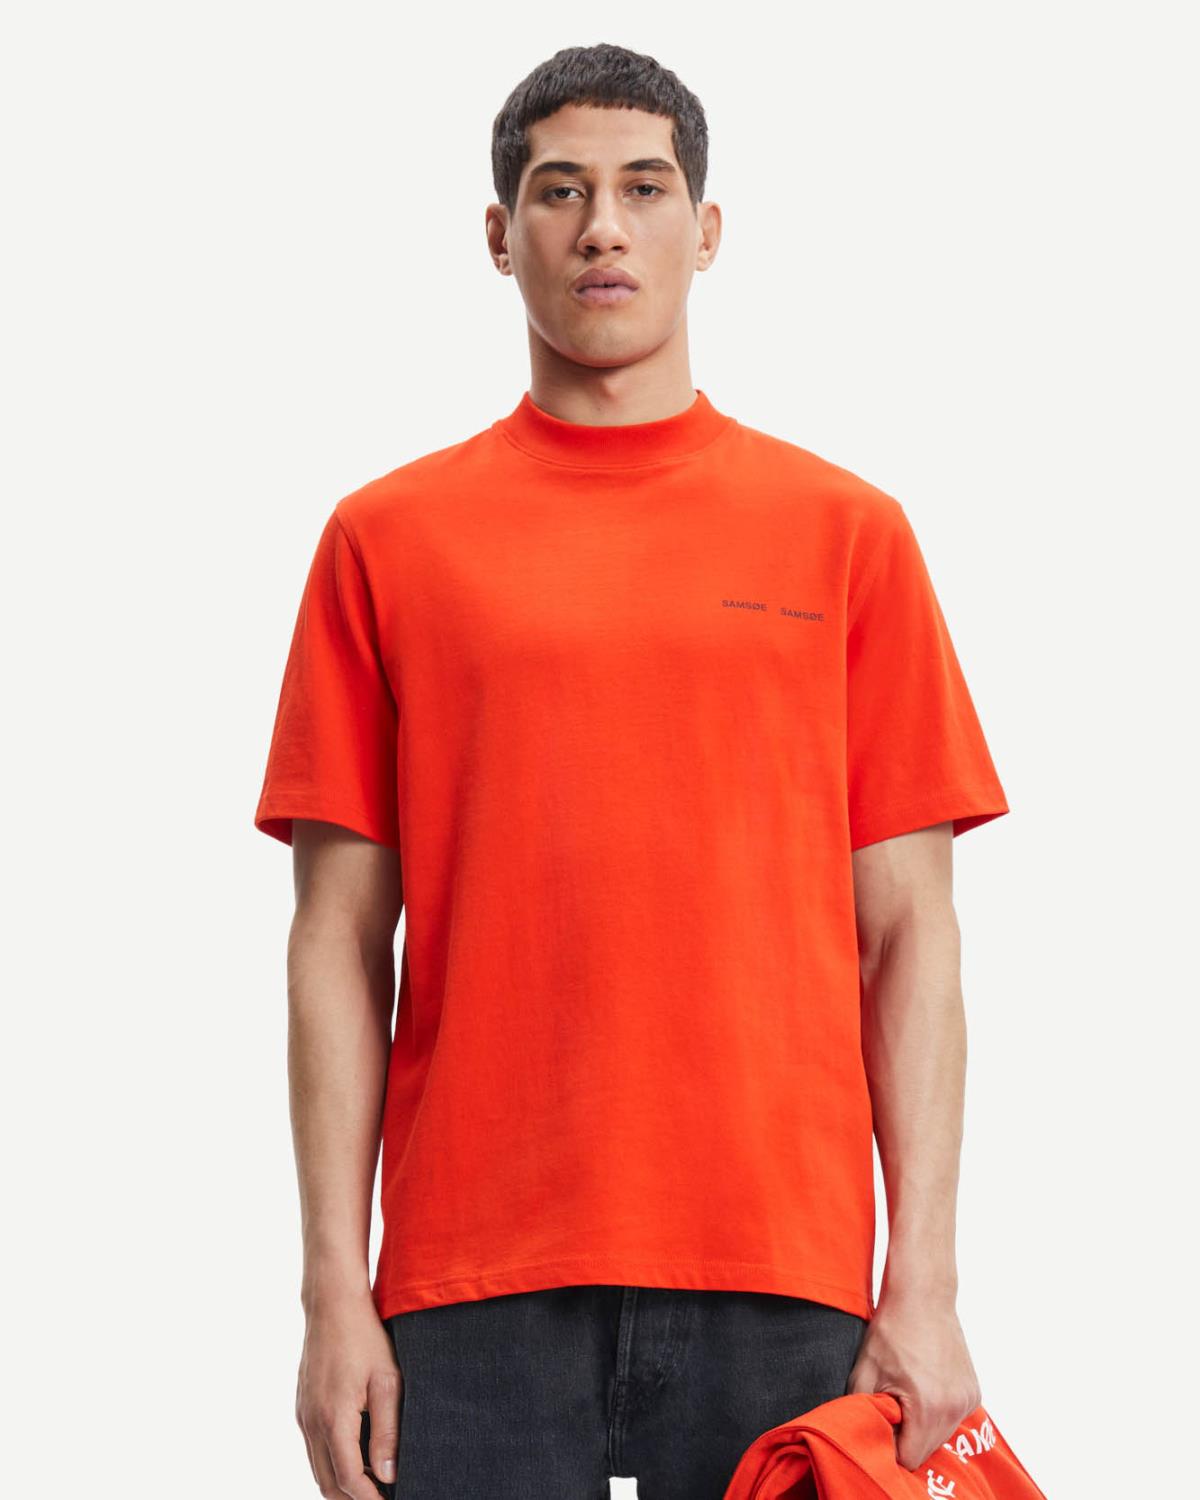 Norsbro T-shirt Orange - Samsøe